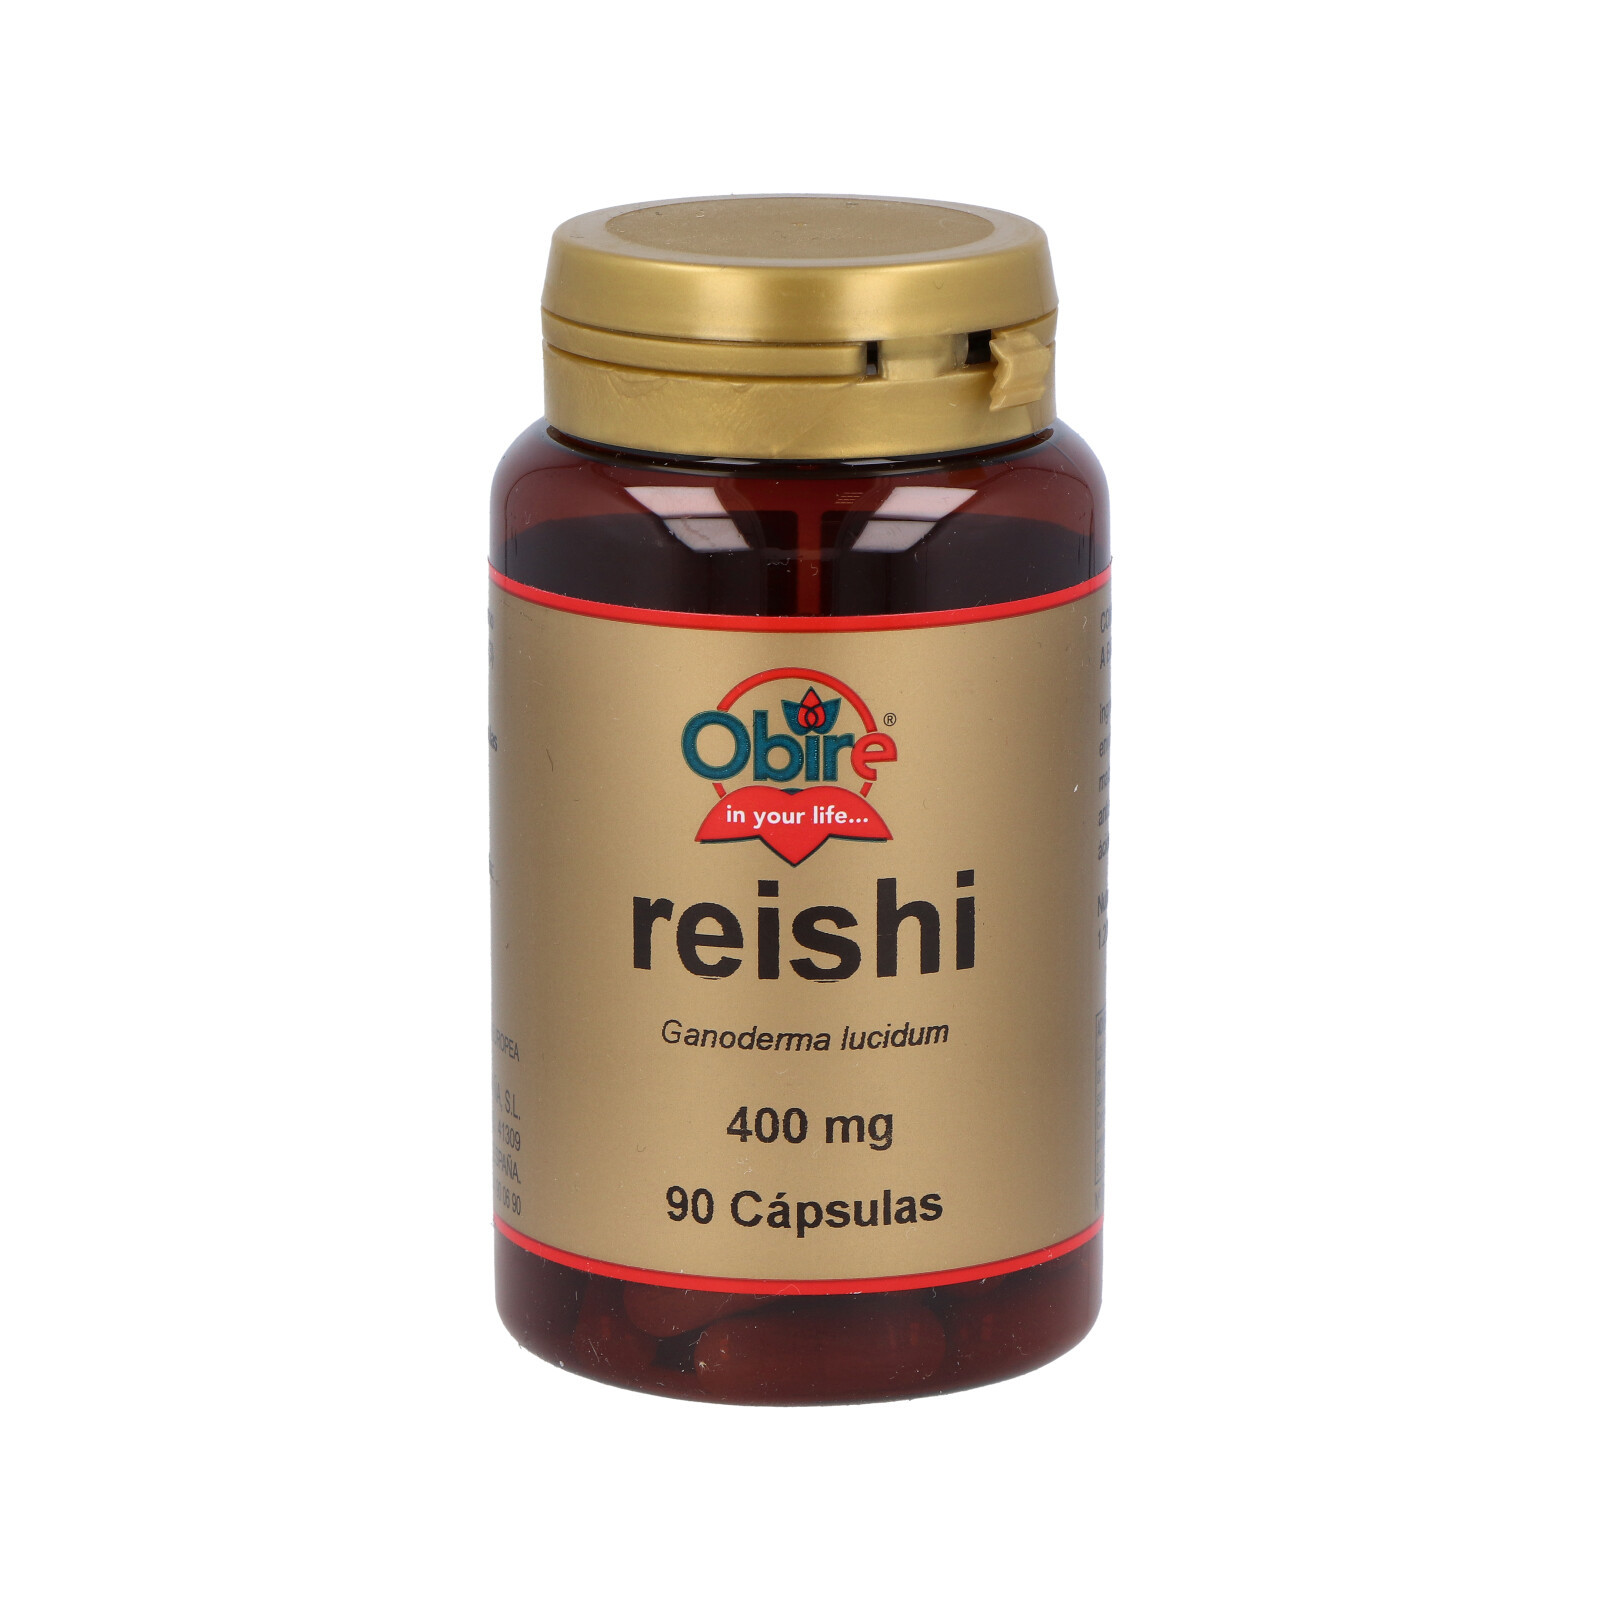 Reishi – Benefici e proprietà del Reishi Ganoderma Lucidum